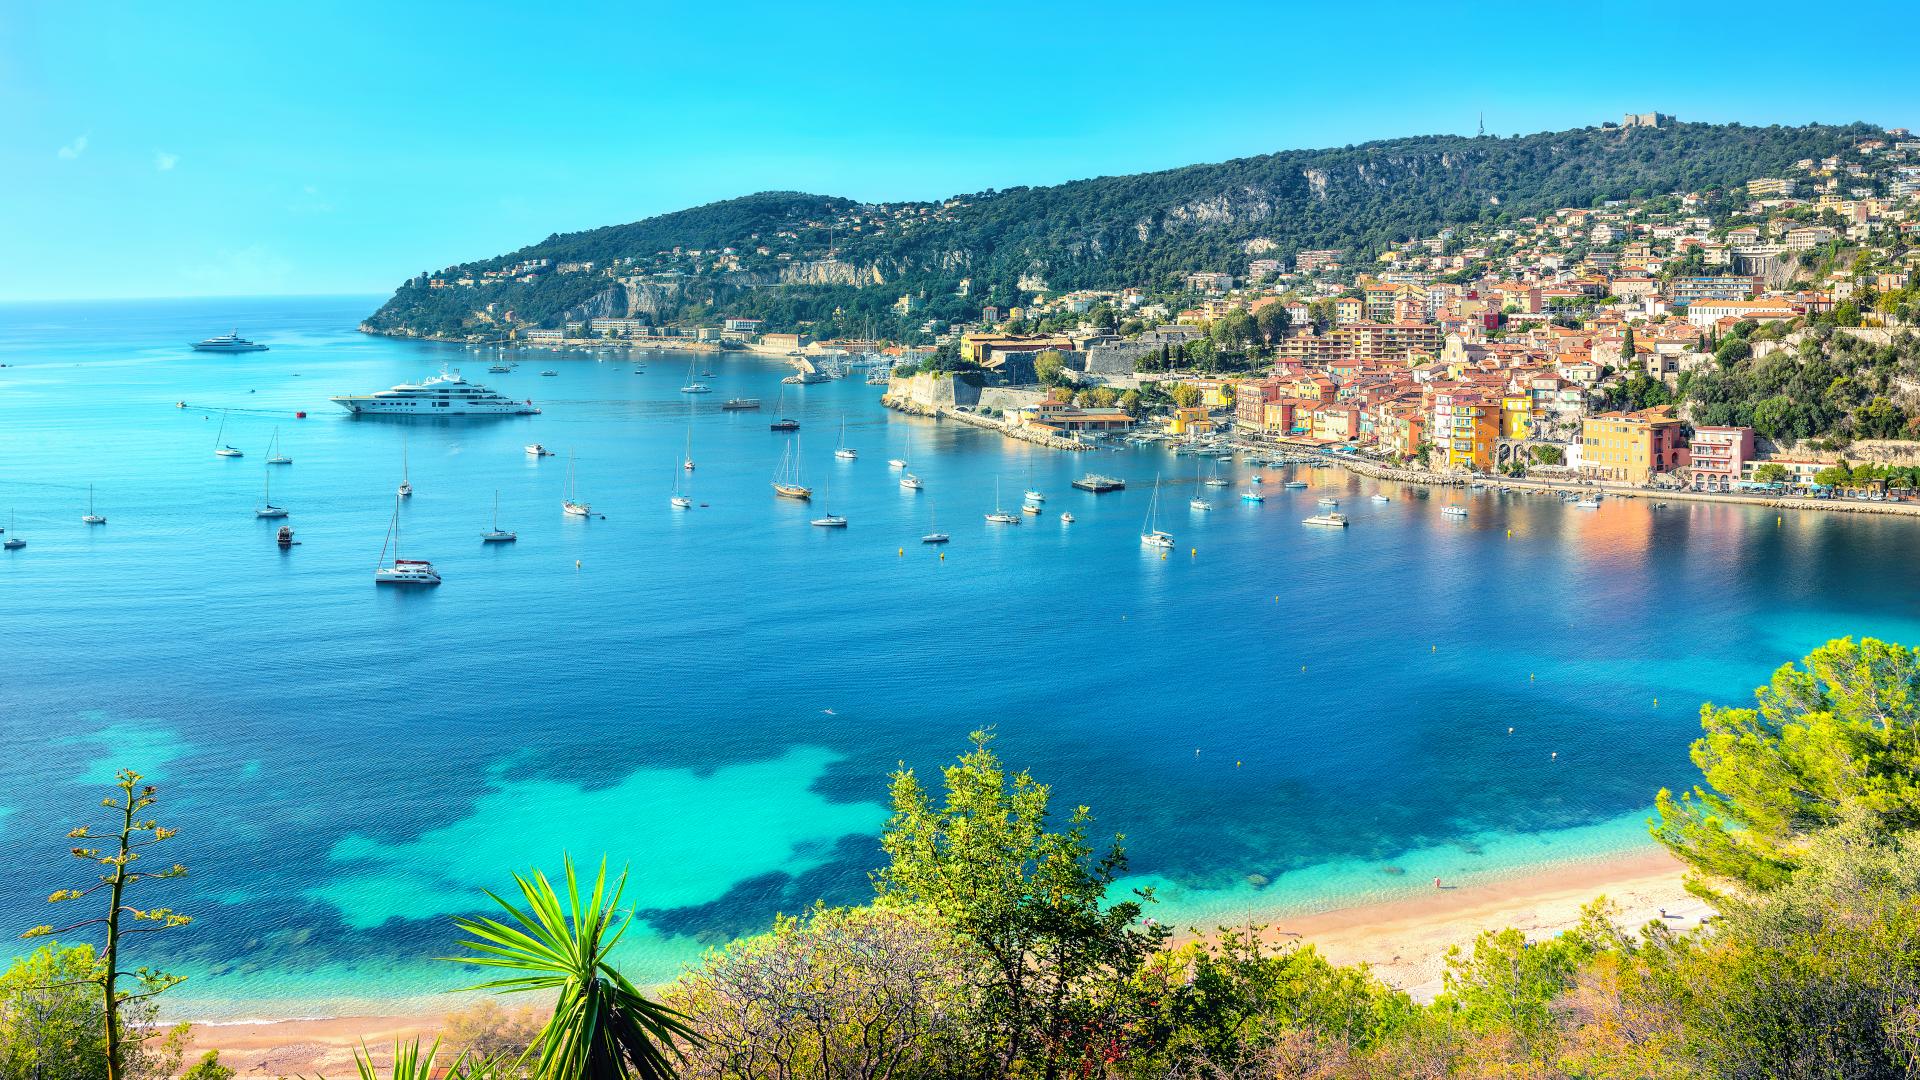 French Riviera / Côte d'Azur